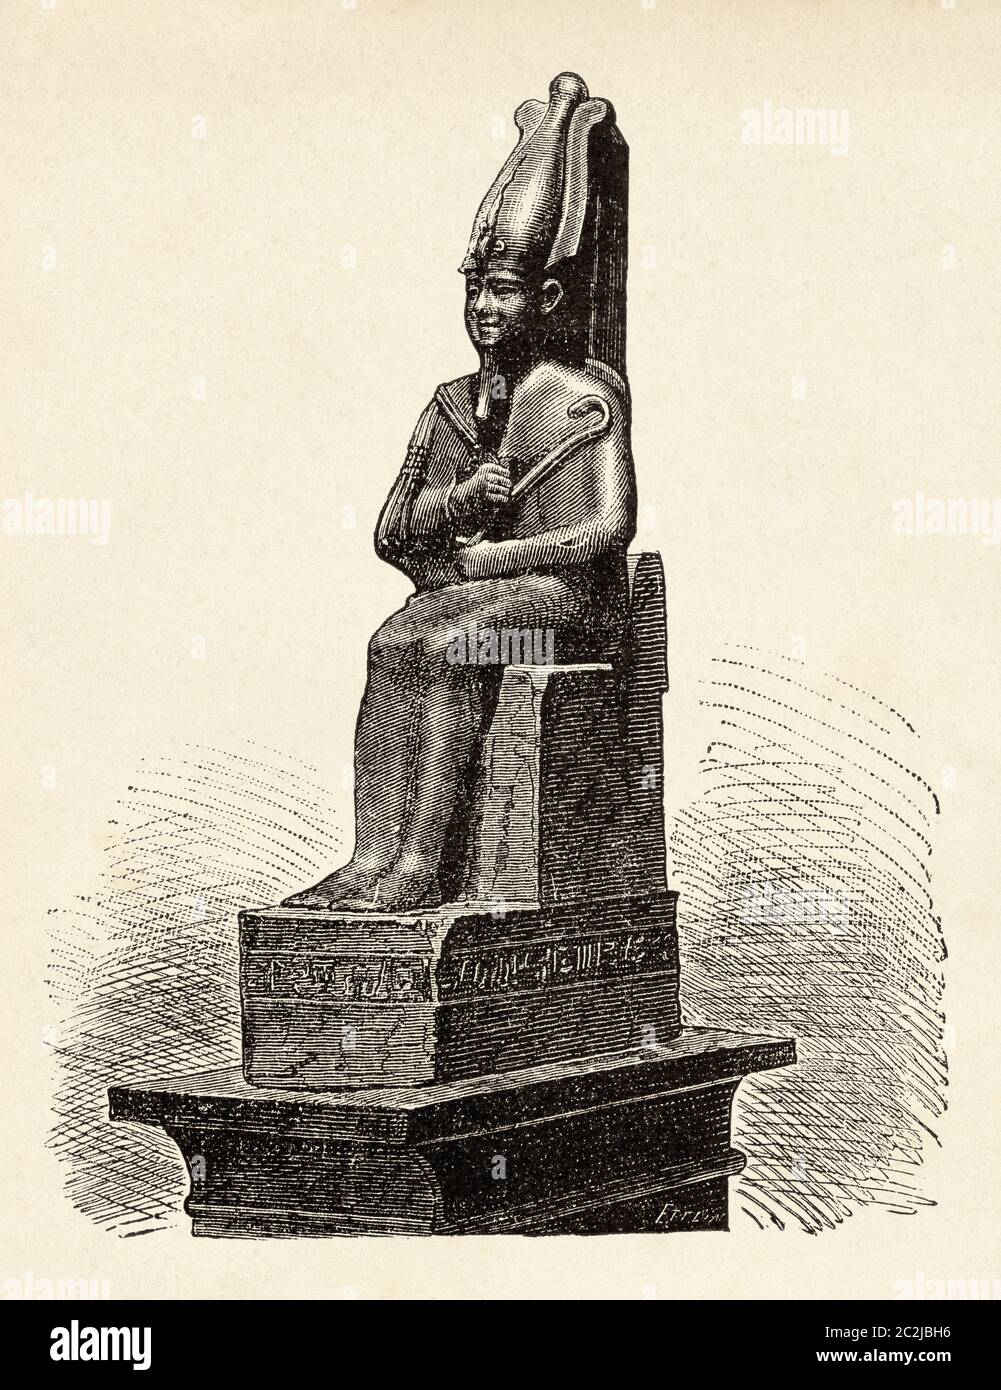 Sculpture of the ancient Egyptian god Osiris, Ancient Egypt. Old 19th century engraved illustration, El Mundo Ilustrado 1880 Stock Photo